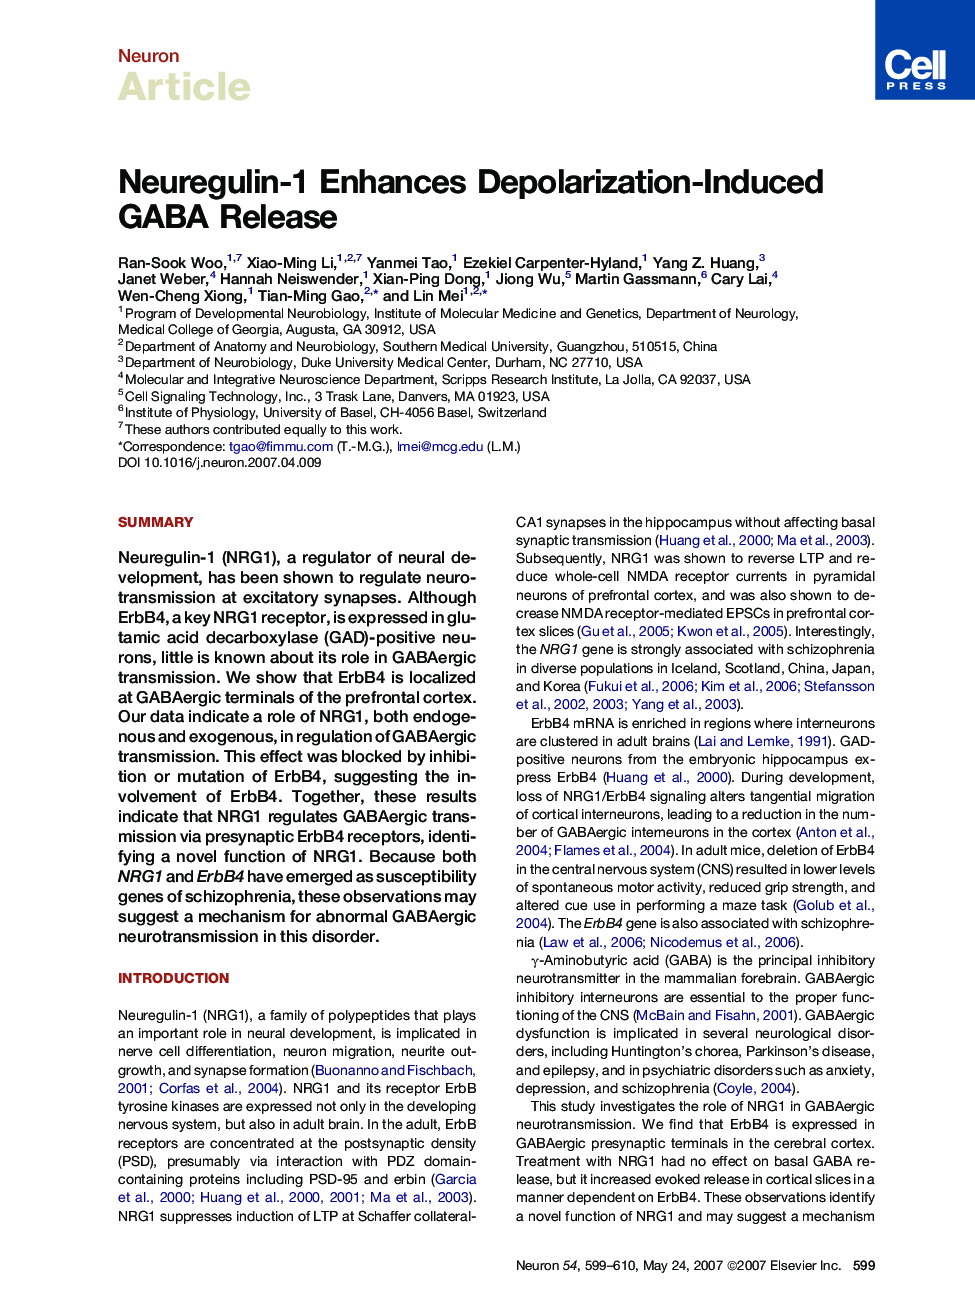 Neuregulin-1 Enhances Depolarization-Induced GABA Release